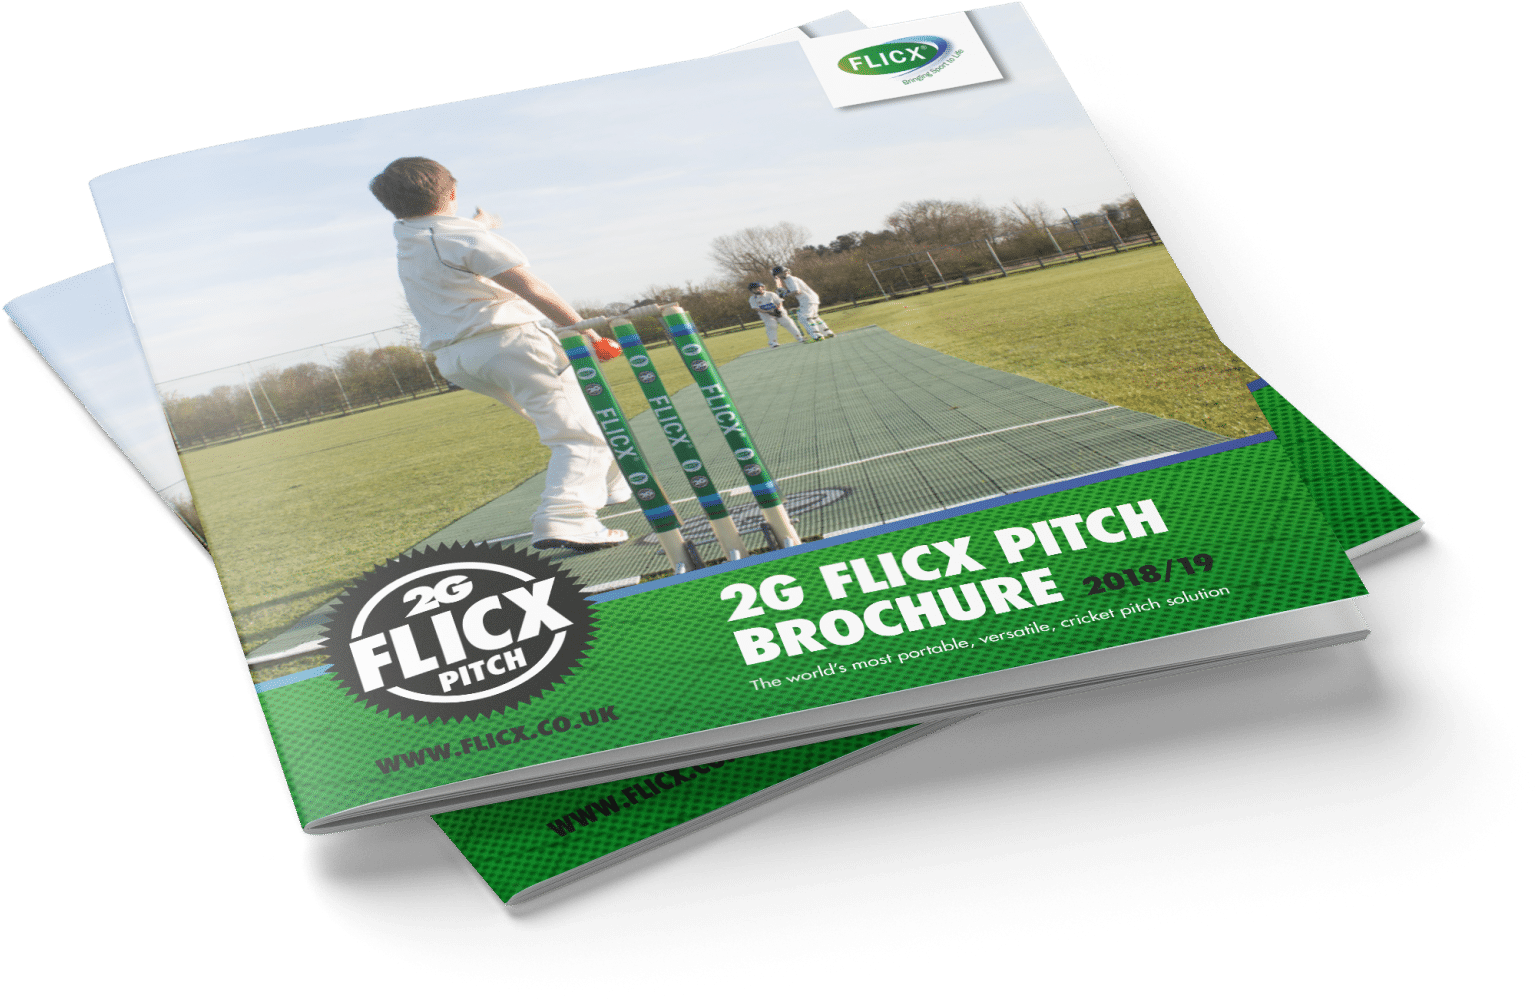 Cricket Pitch Brochure Mockup20182019 PNG